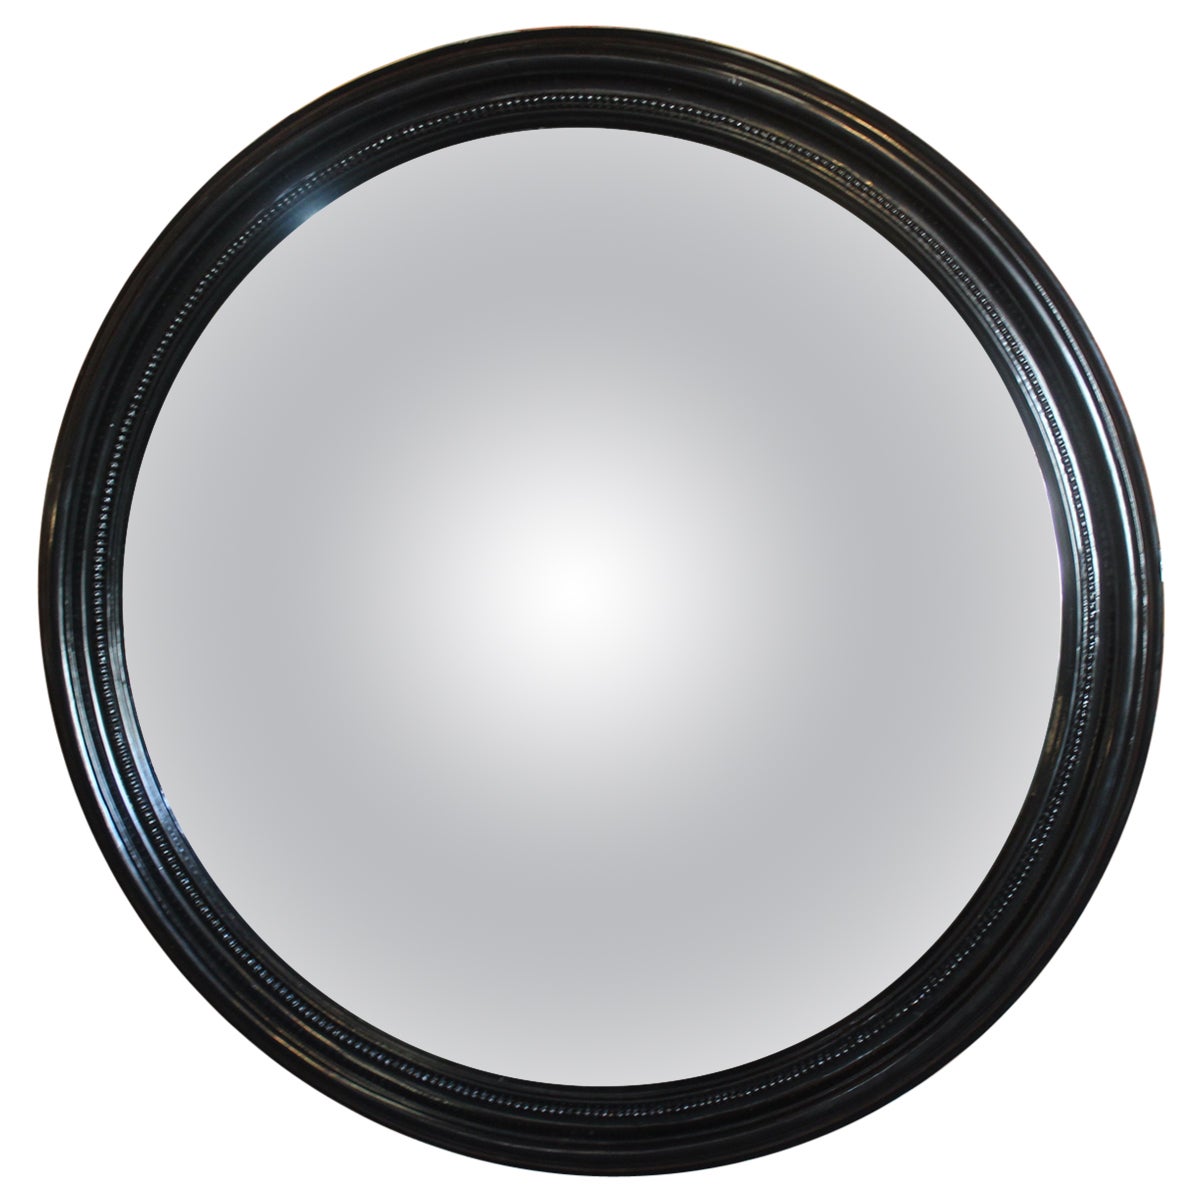 1940s French Parisian Convex Bulls Eye Mirror